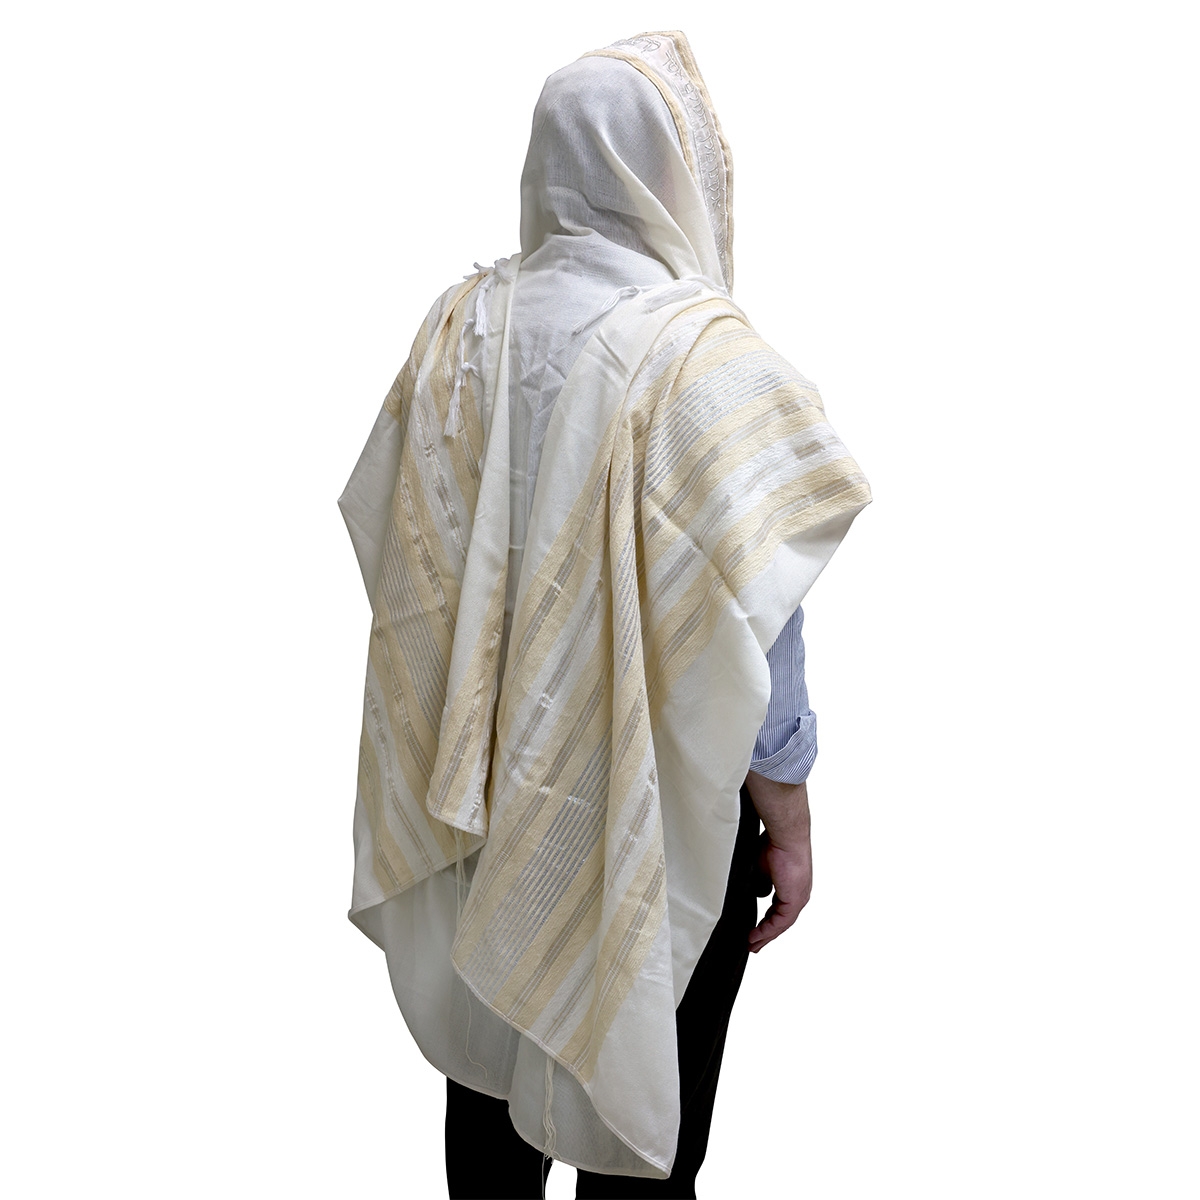 Handwoven Gold Pattern Tallit (Prayer Shawl) Set from Rikmat Elimelech - Non-Slip - 1